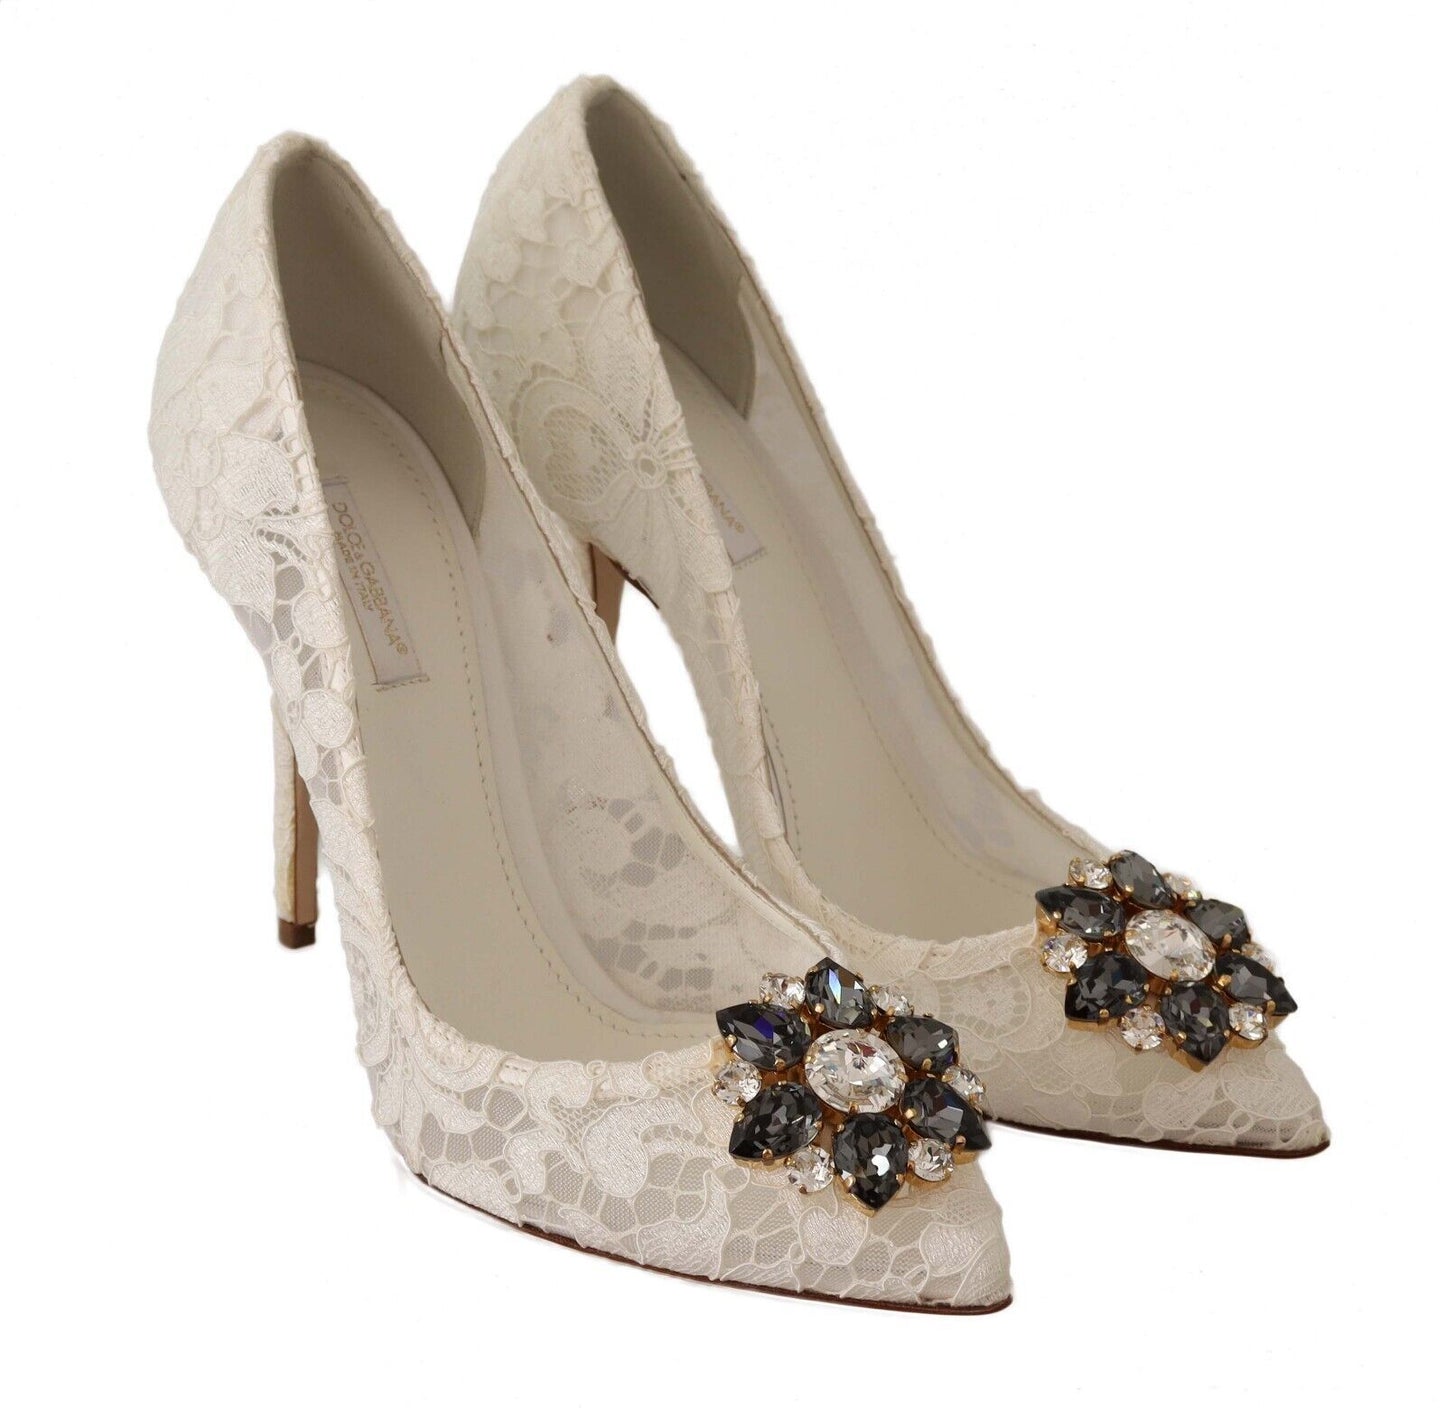 Elegant White Lace Heels with Crystal Embellishments